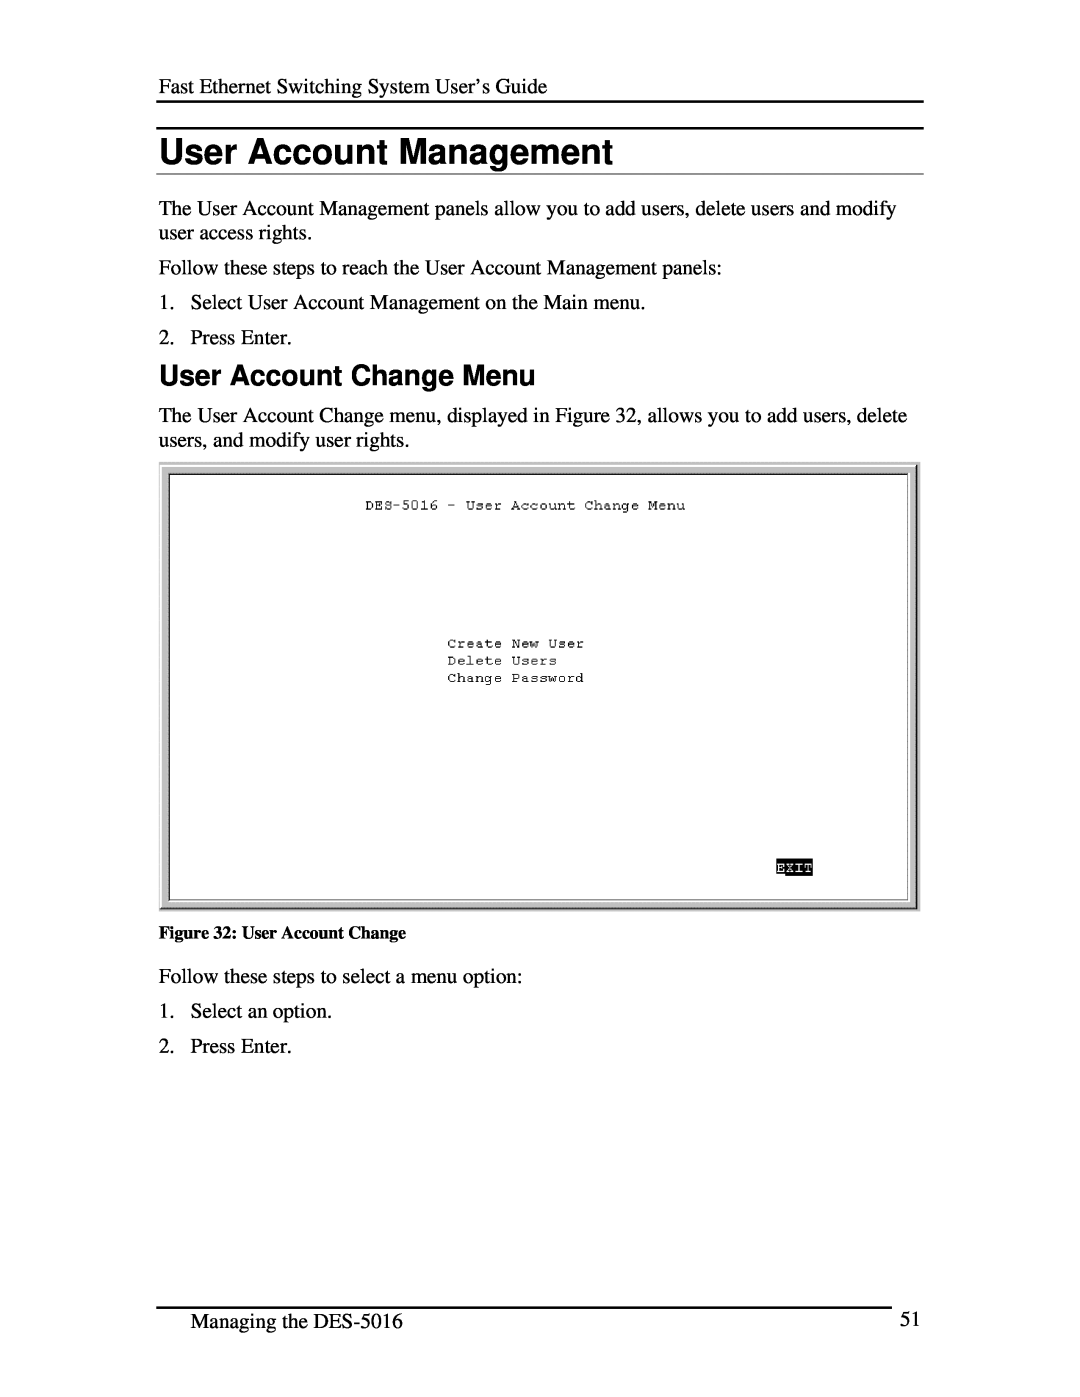 D-Link DES-5016 manual User Account Management, User Account Change Menu 